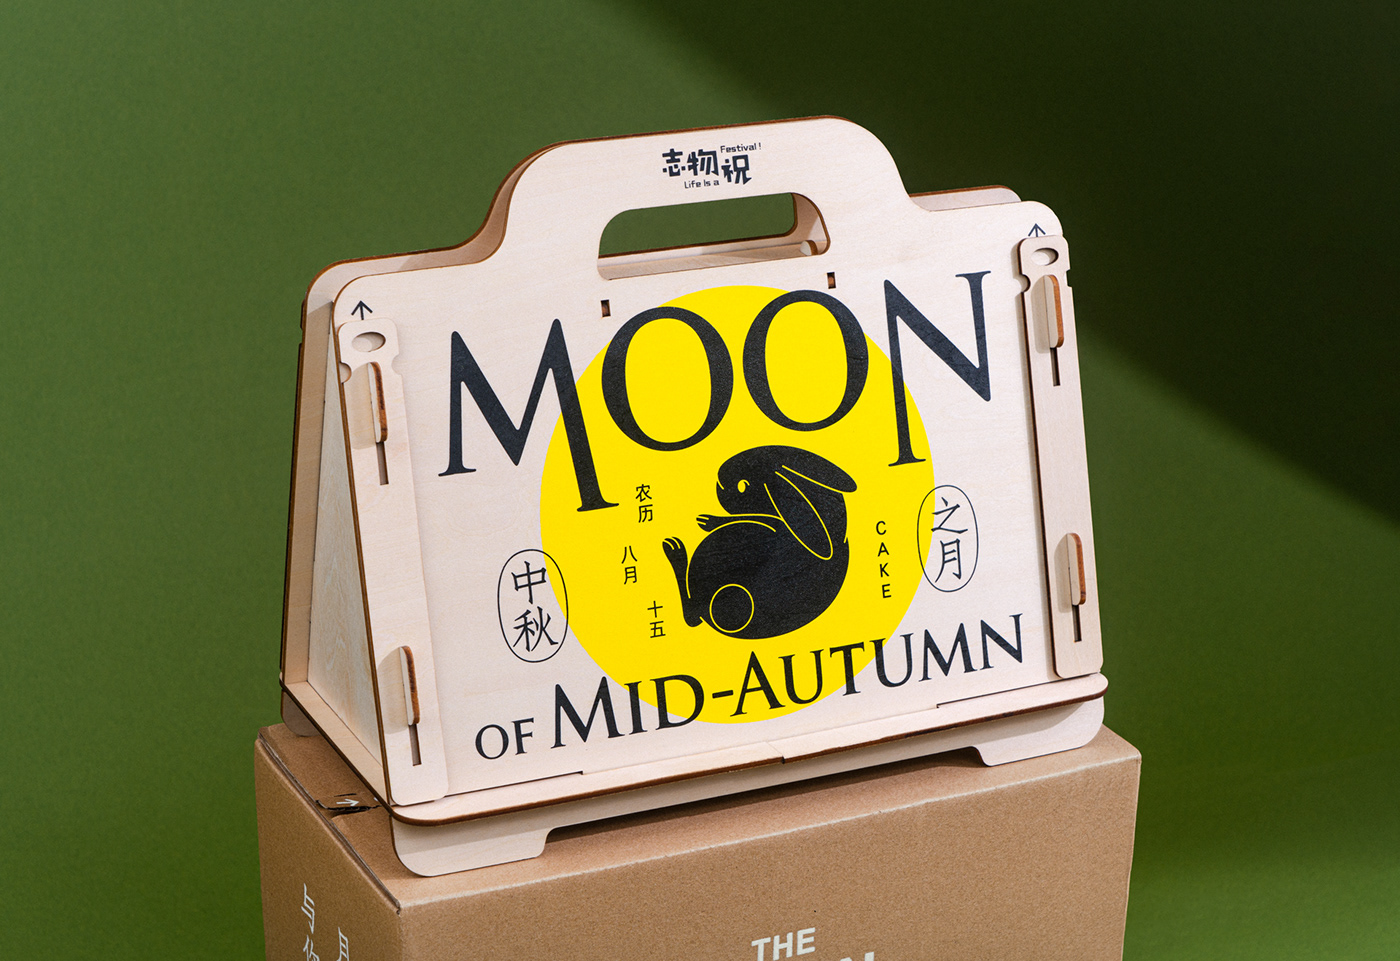 moon cake packaging design Mid-Autumn Festival gift box 中秋节 包装设计 图形设计 graphic design  产品设计 product design 